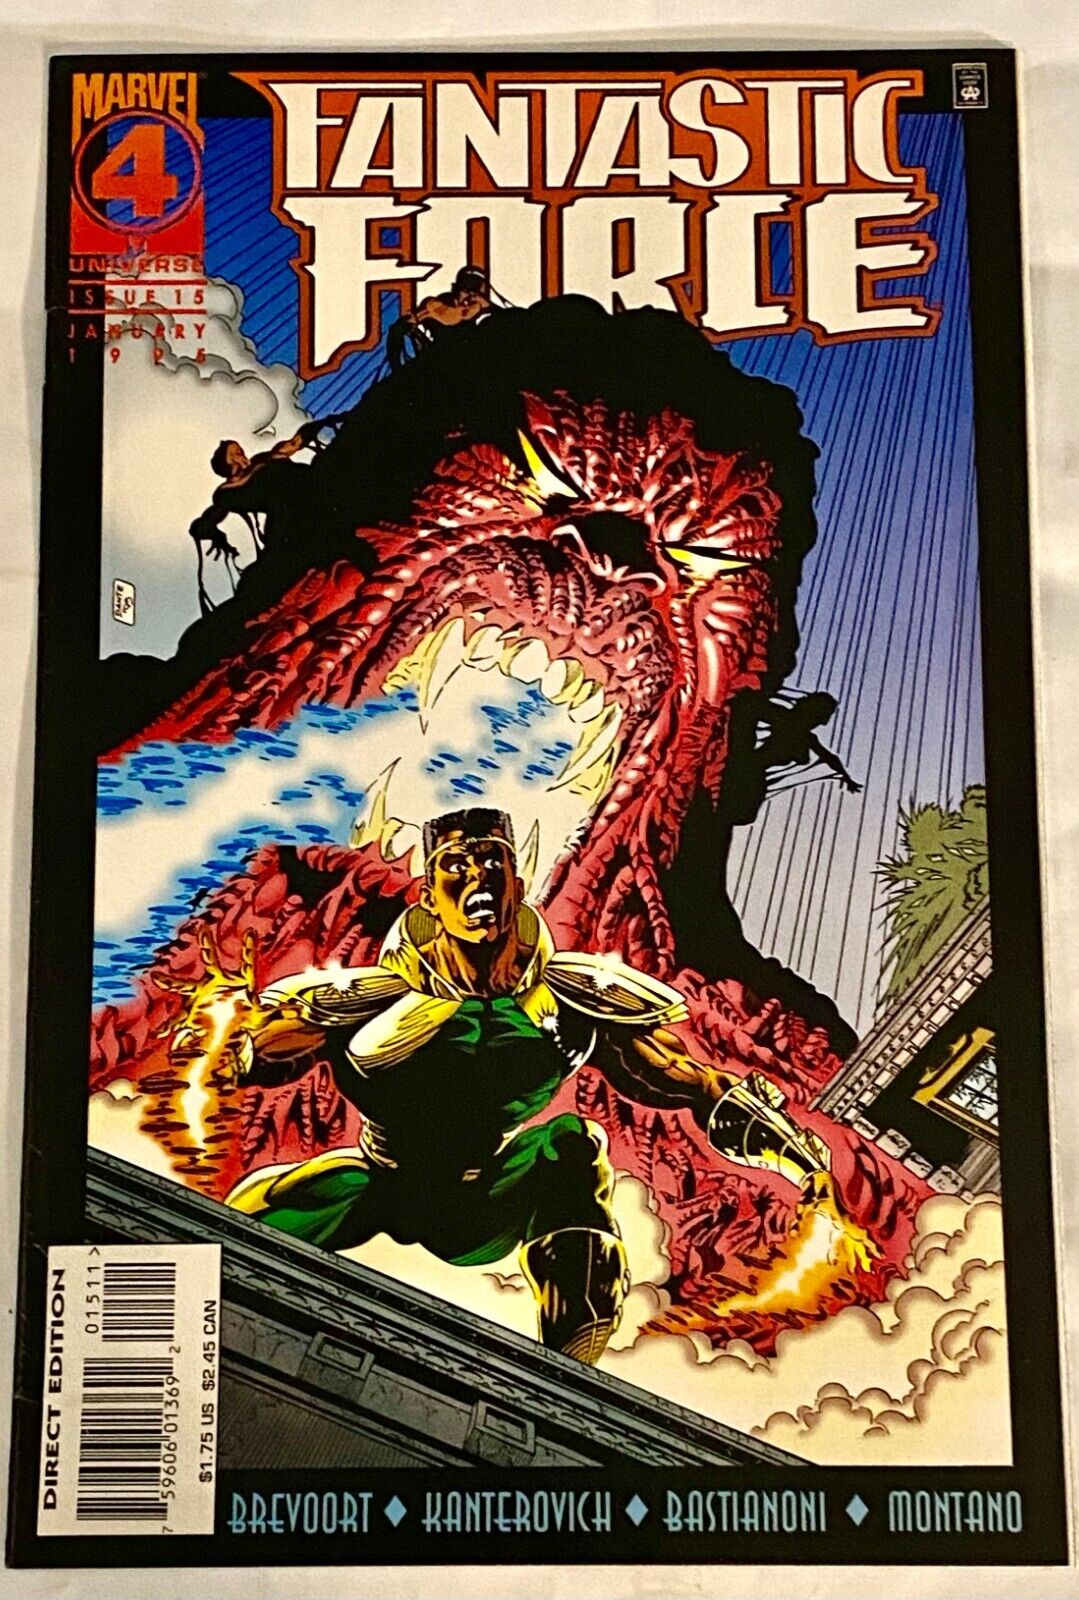 Fantastic Force - Issue 15 - 1st Print - 1995 - Marvel Universe - NM/MT - OBO